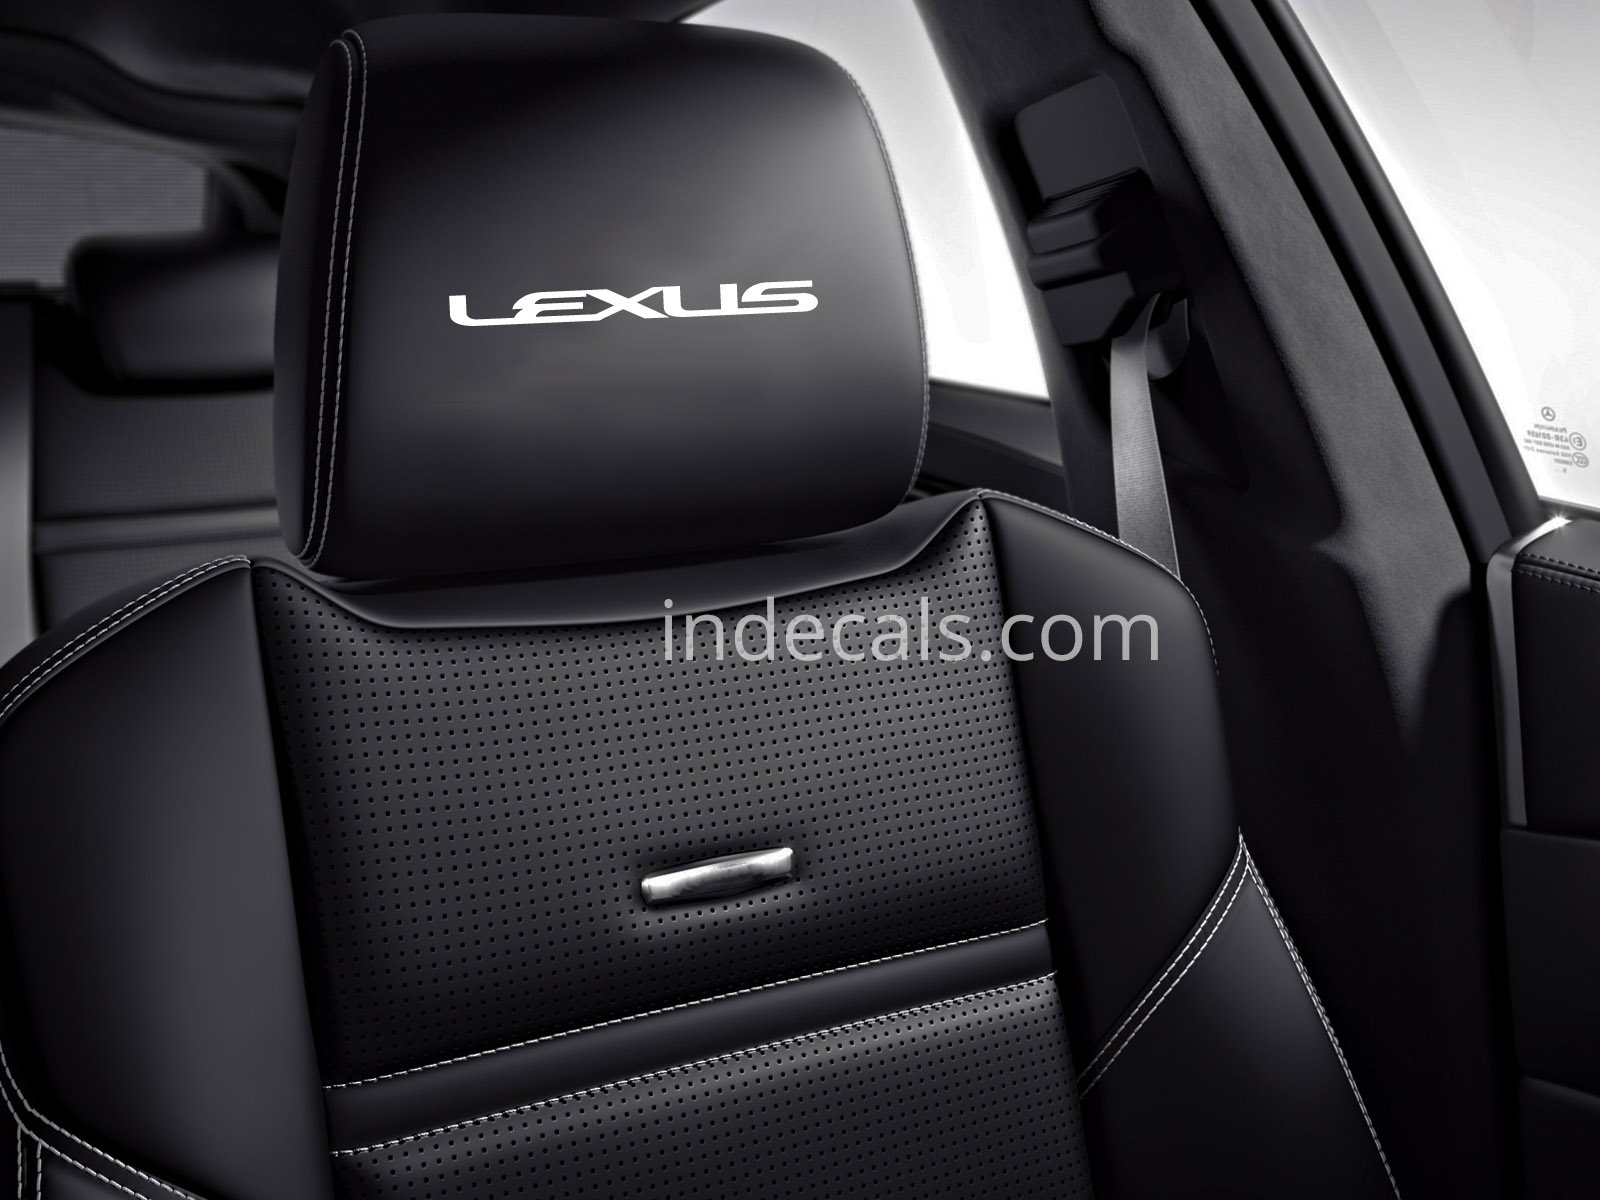 6 x Lexus Stickers for Headrests - White